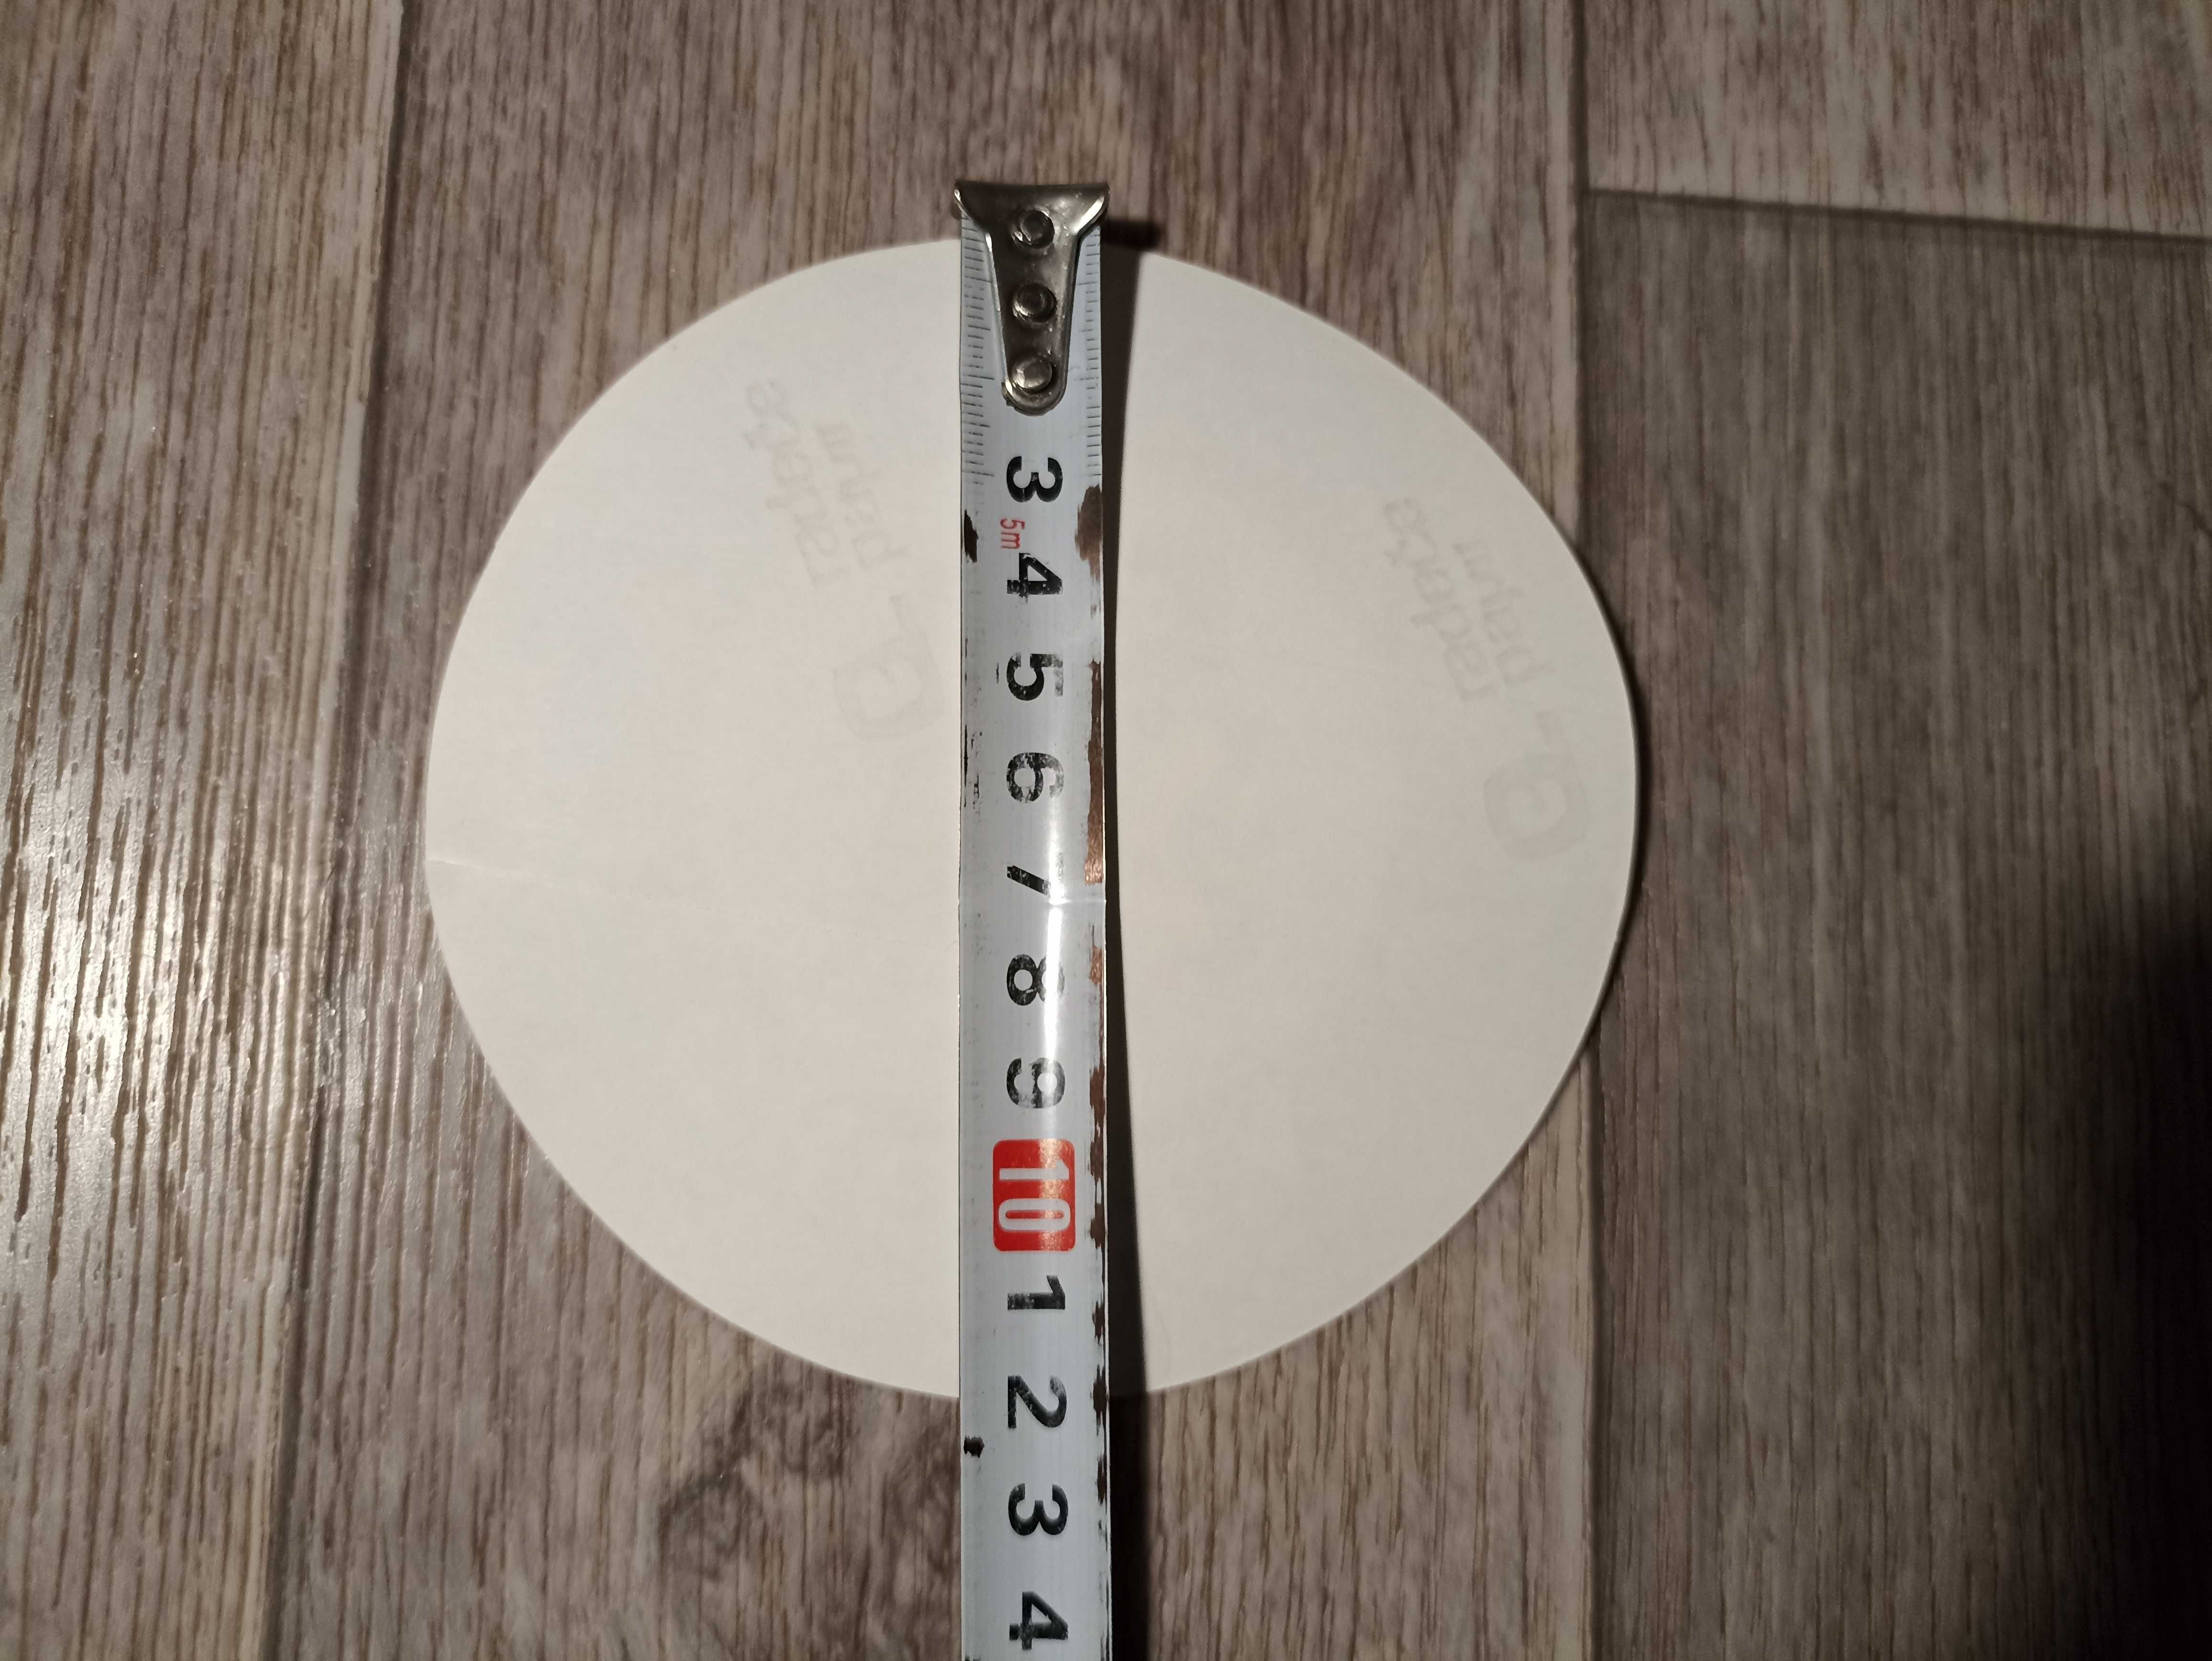 Челси наклейки диаметр 12 см футбольная атрибутика для дома кафе набор